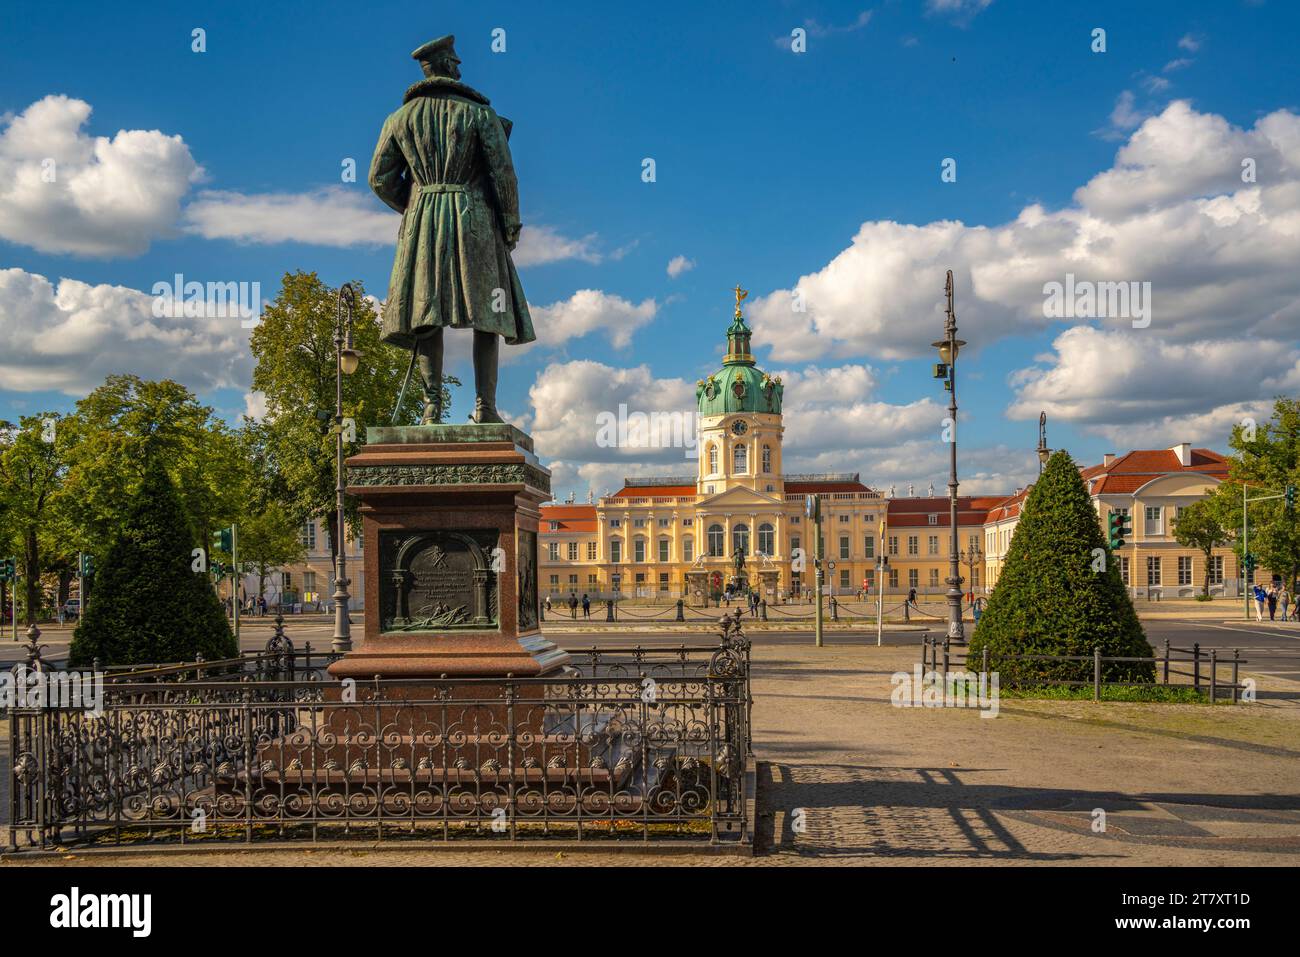 View of Charlottenburg Palace at Schloss Charlottenburg and Monument to Albrecht von Preussen, Berlin, Germany, Europe Stock Photo